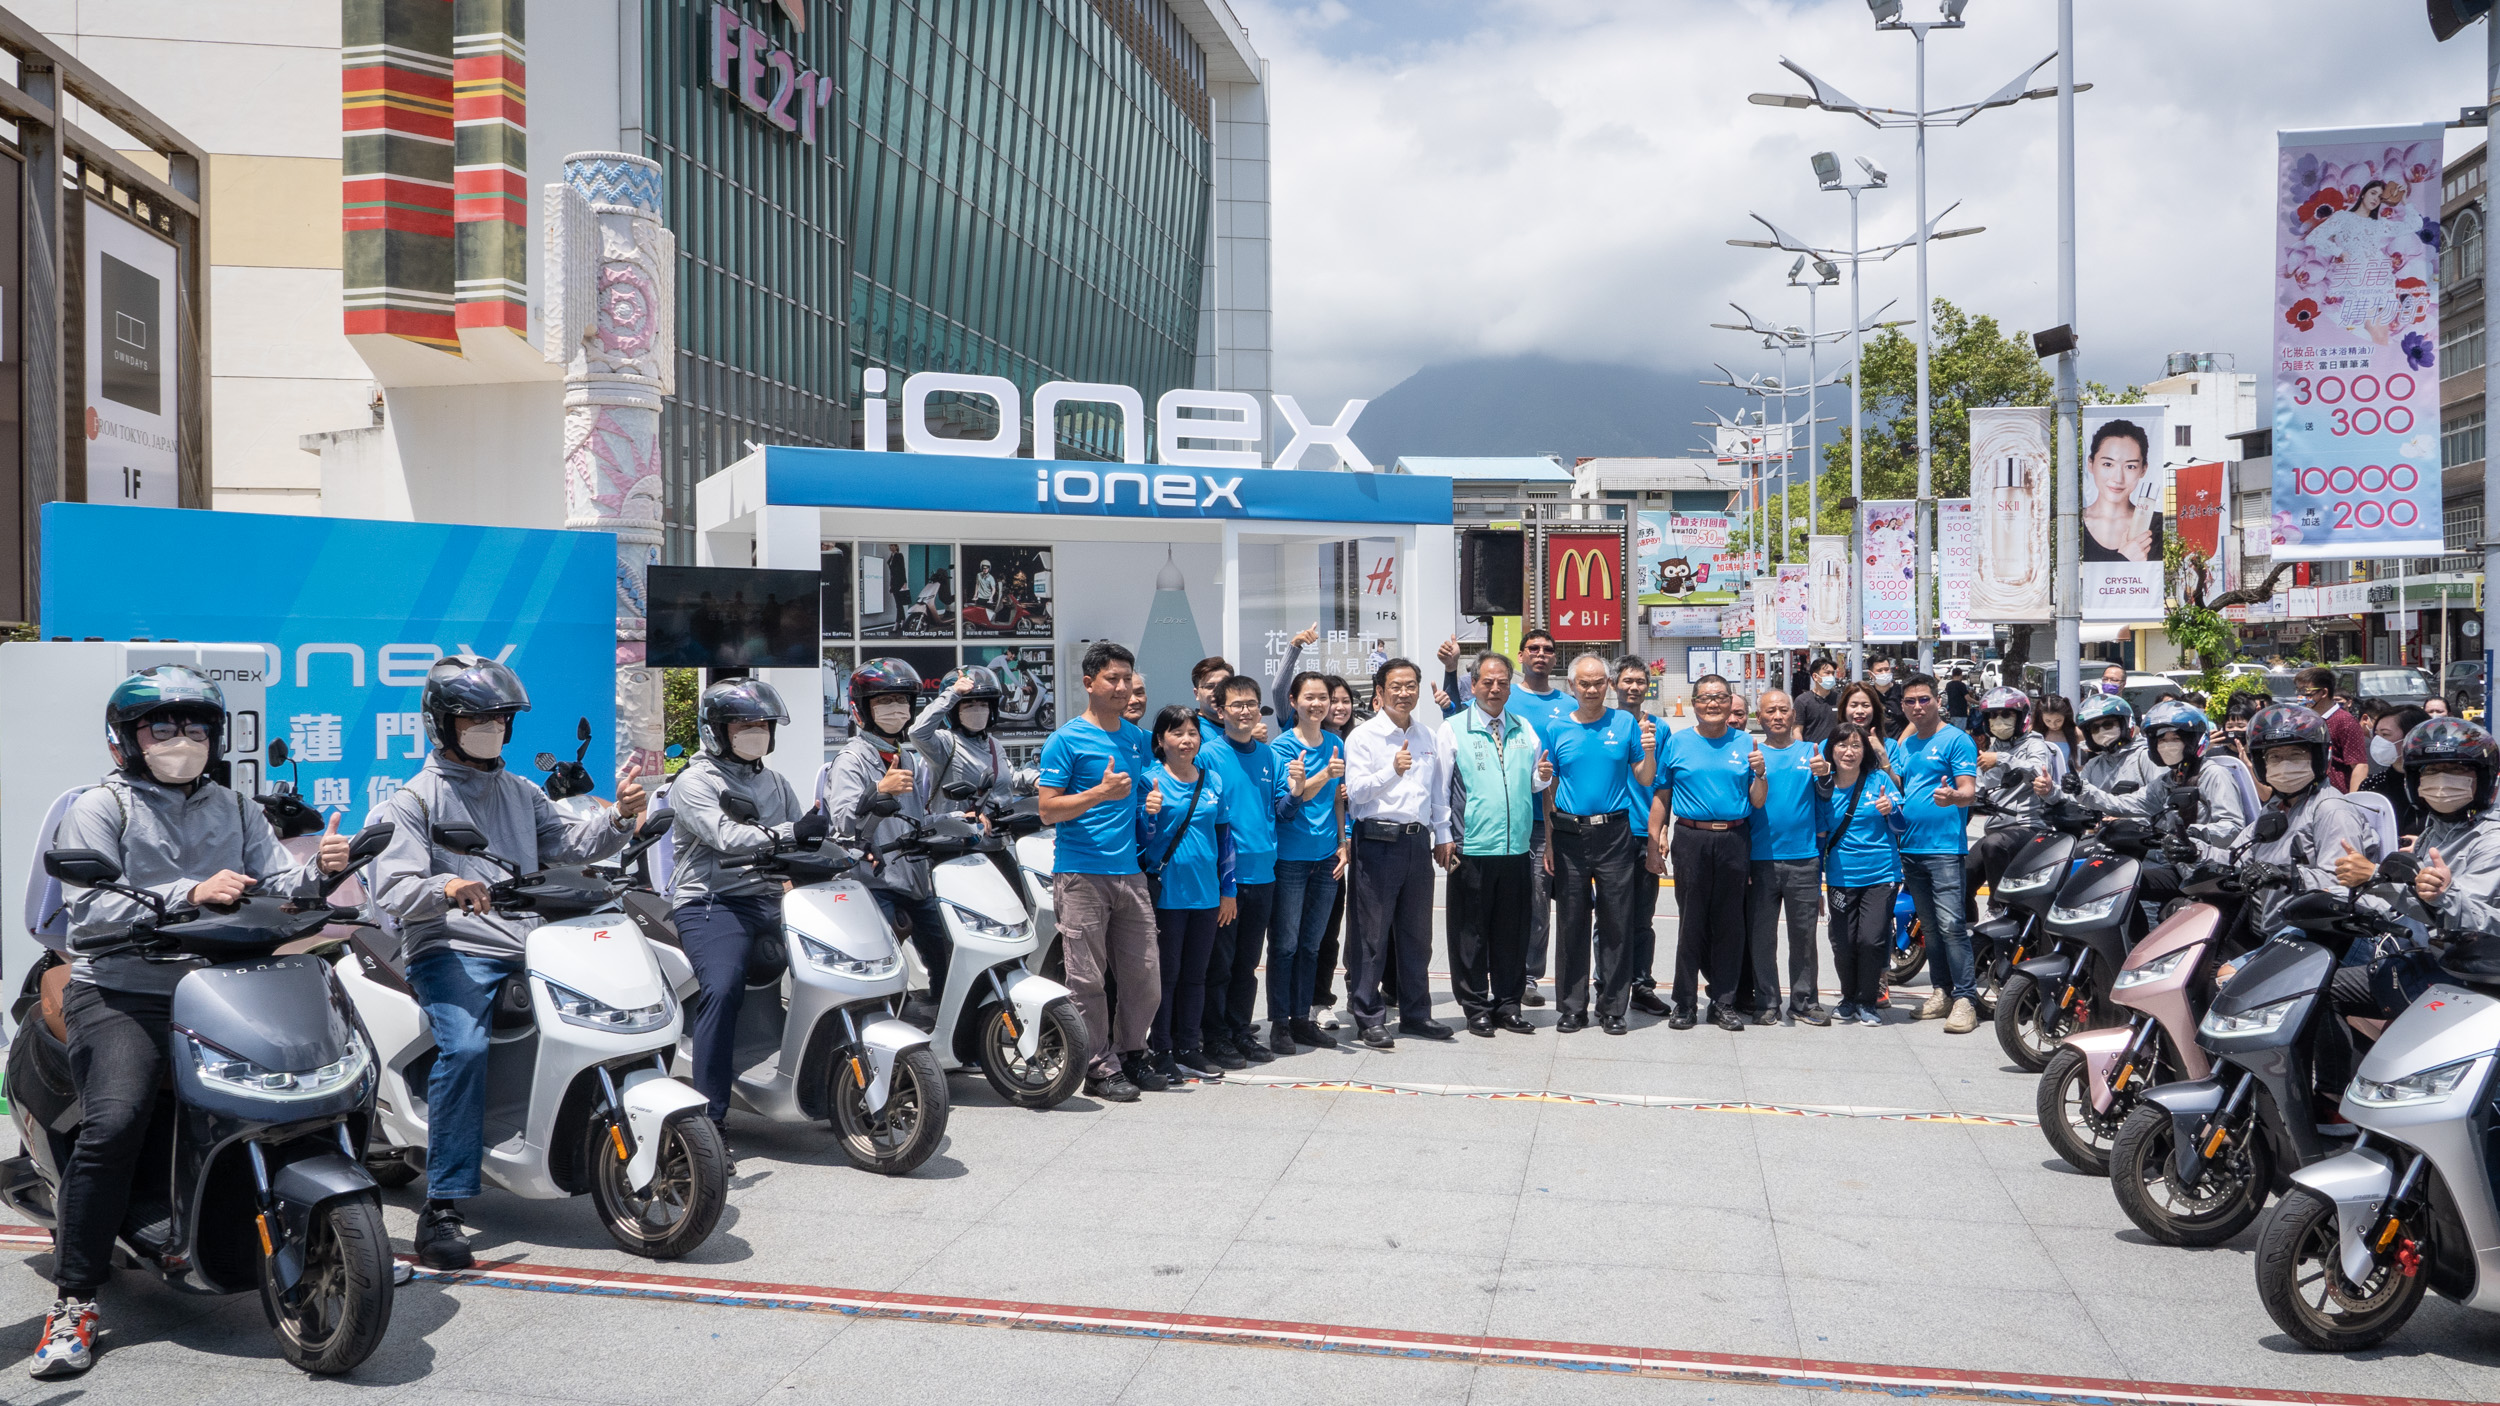 Ionex 3.0 目標年底前花蓮設立 60 座換電站！花蓮專賣店與快閃店「開電大吉」